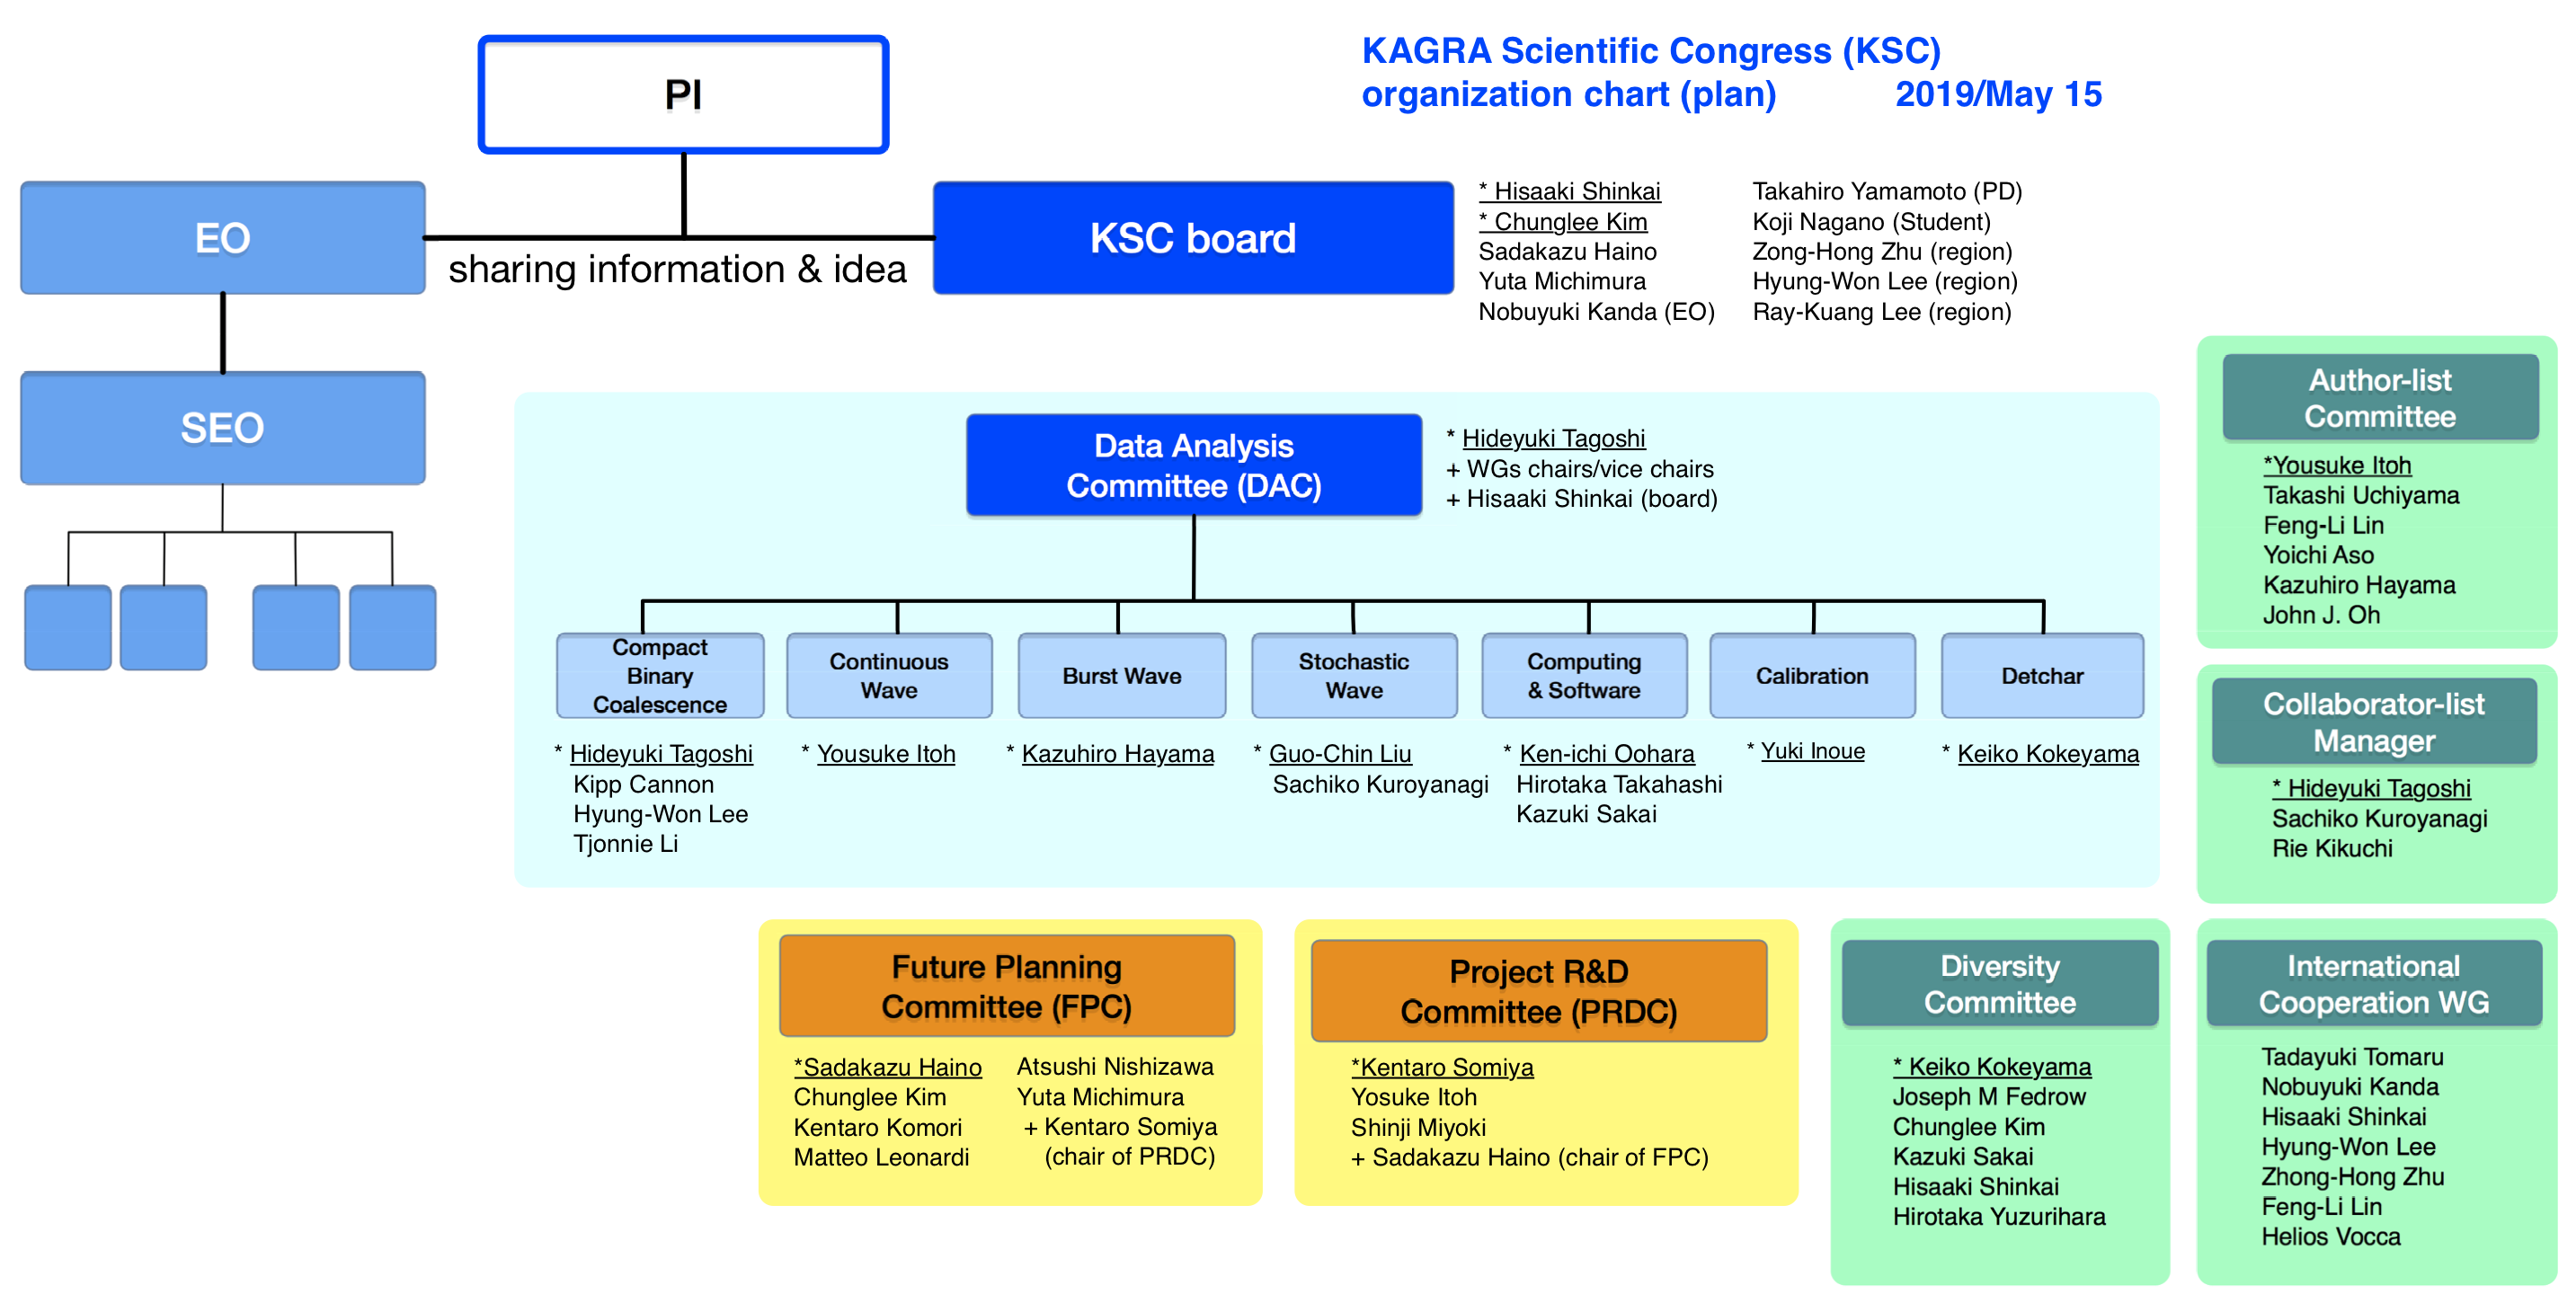 KSC organization chart (2019/May15)